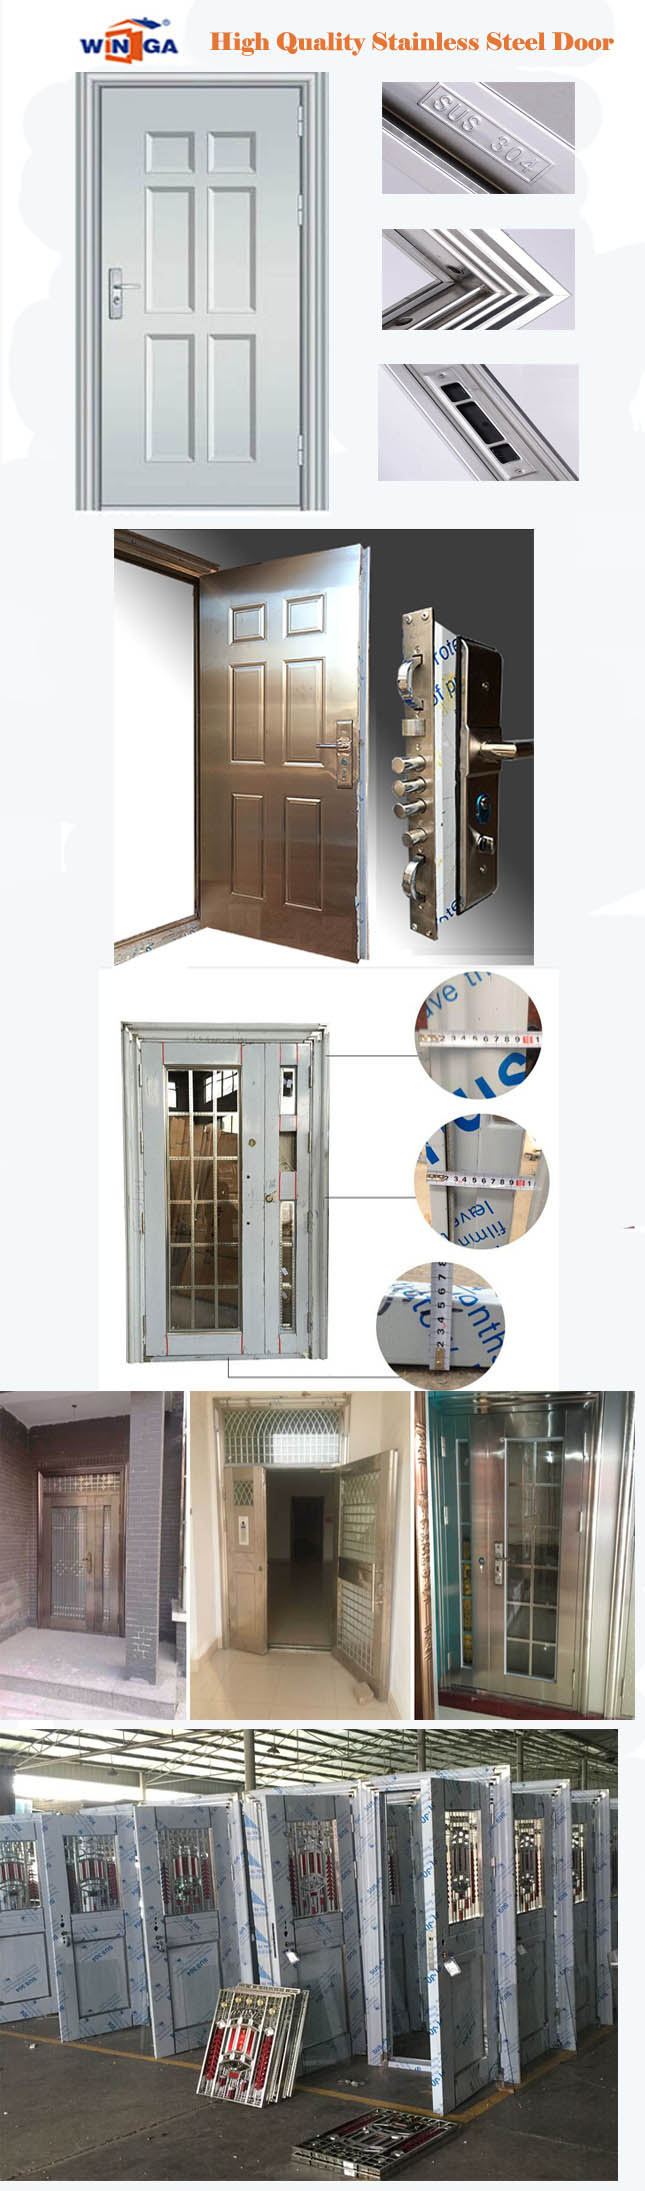 Silver Color Stainless Steel Sunproof Metal Security Door (W-GH-26)